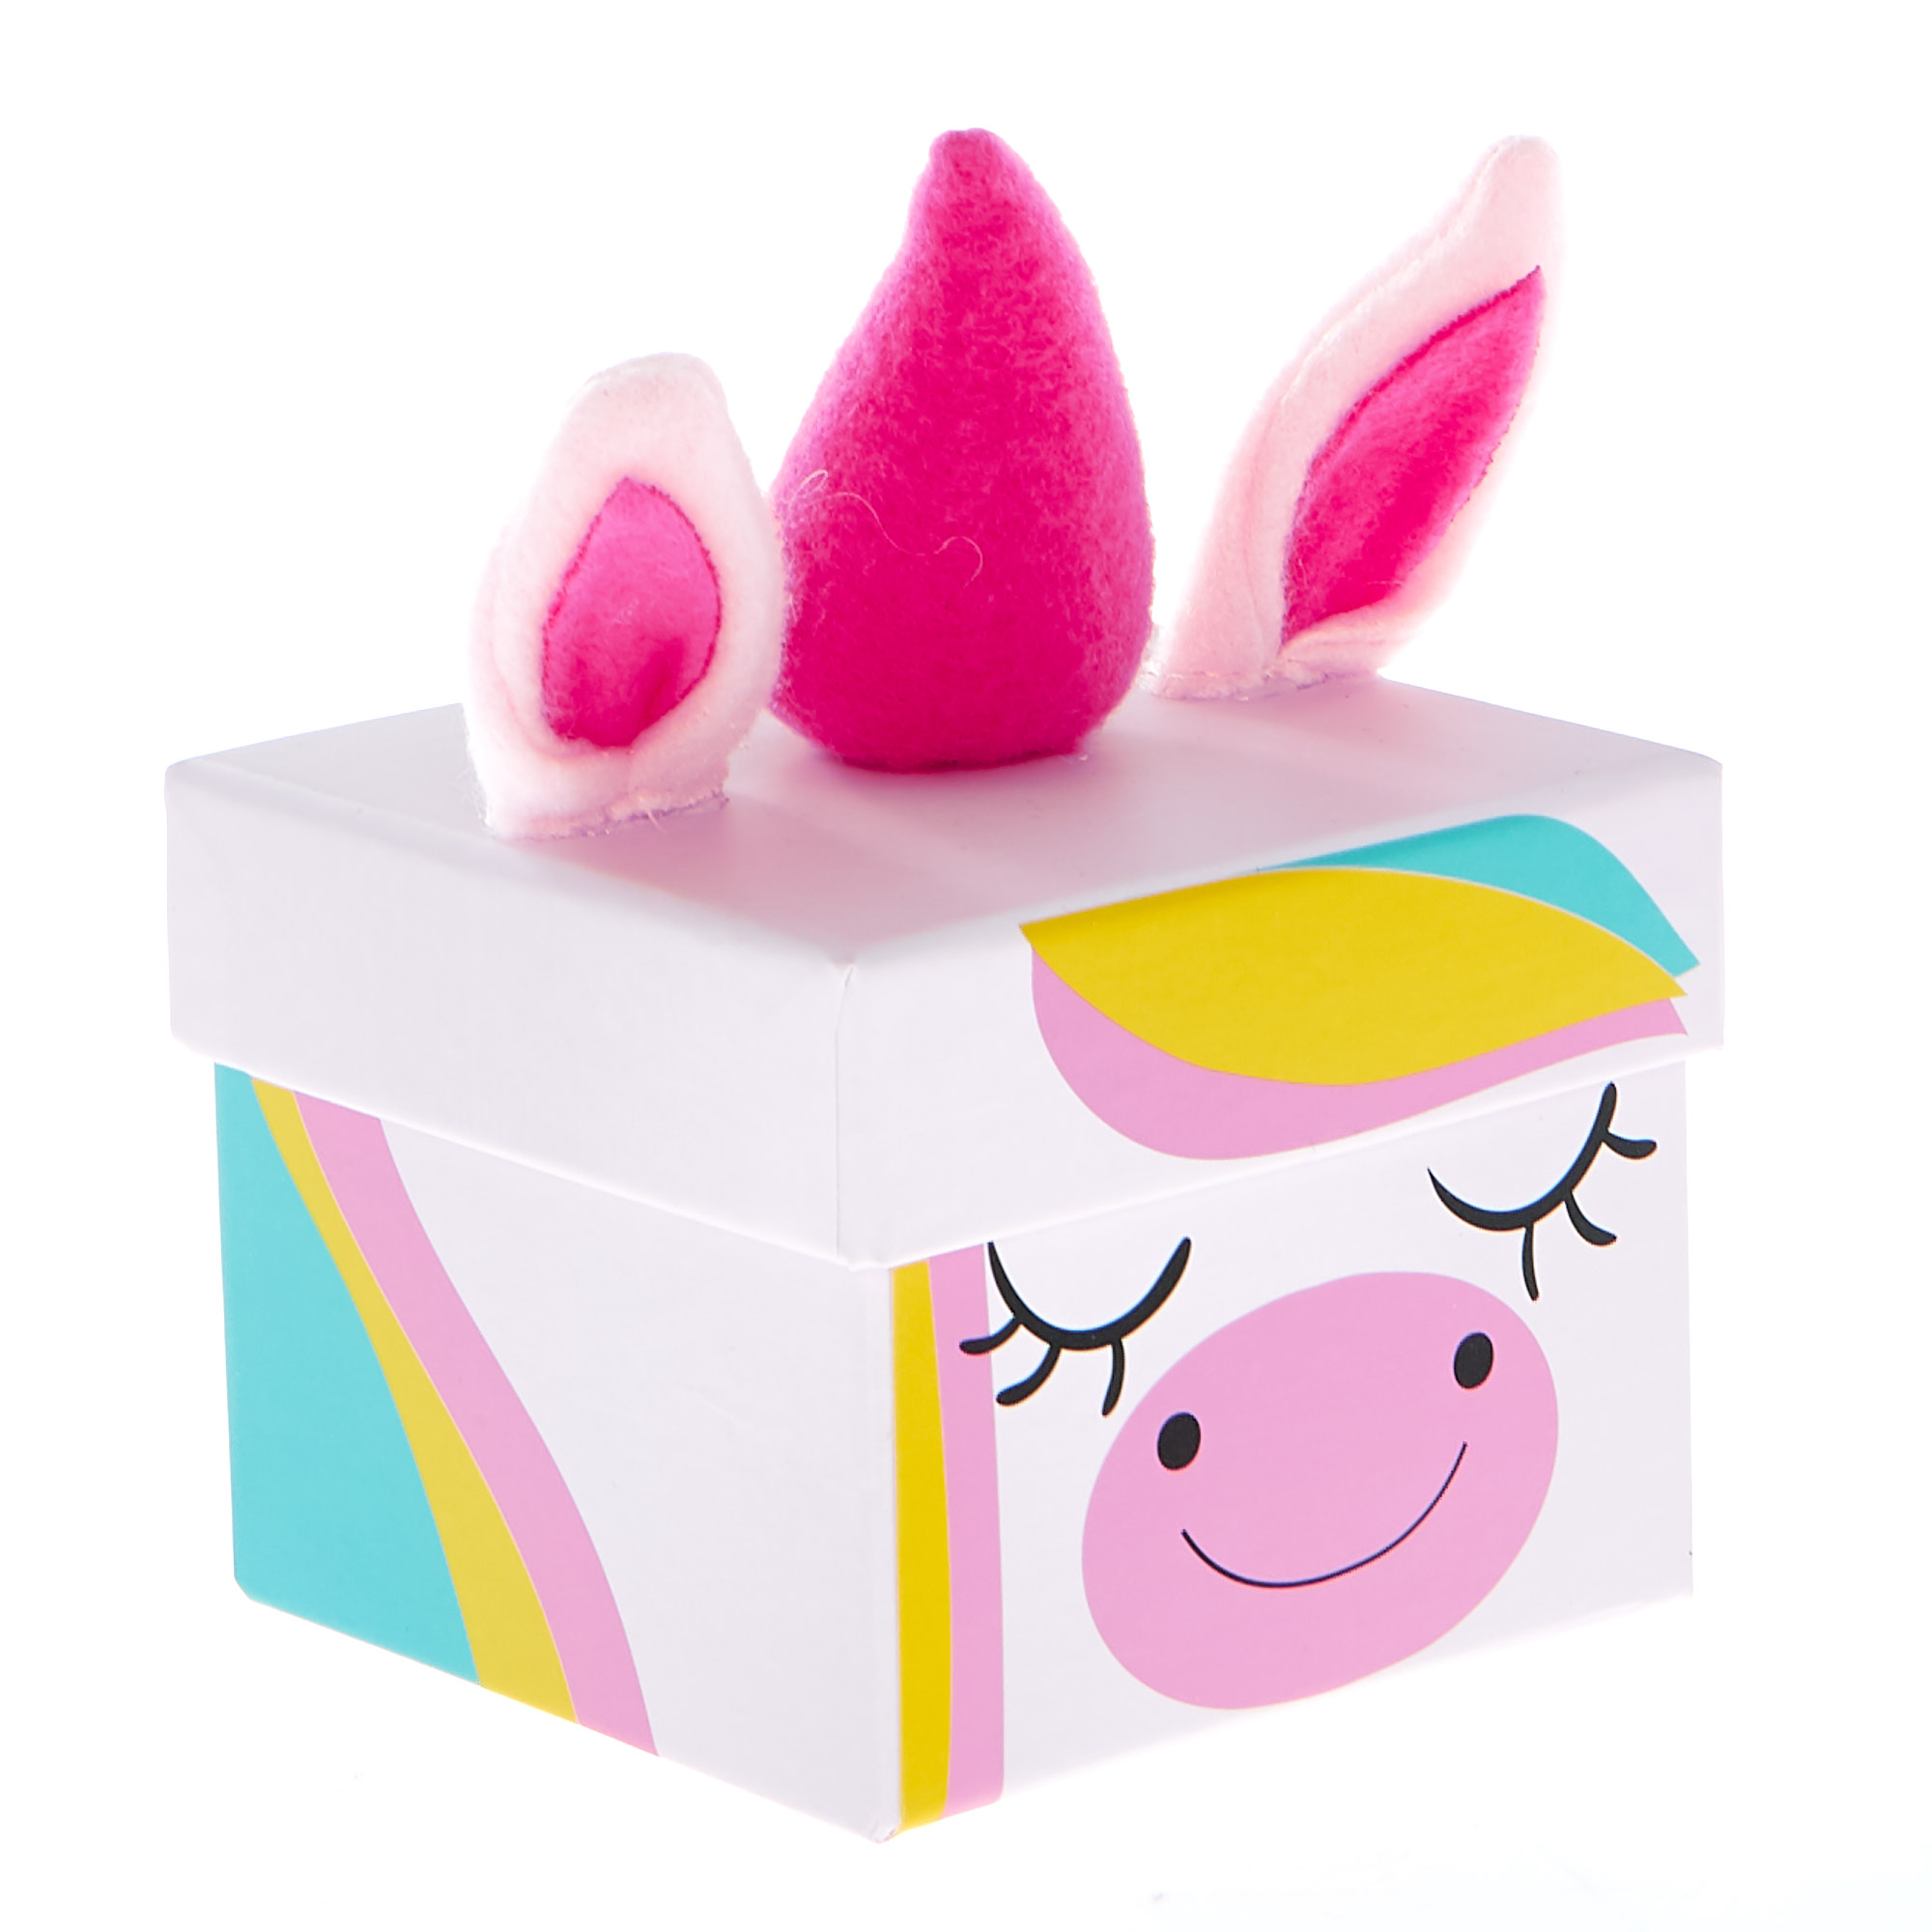 Stackable Plush Unicorn Gift Boxes - Set of 3